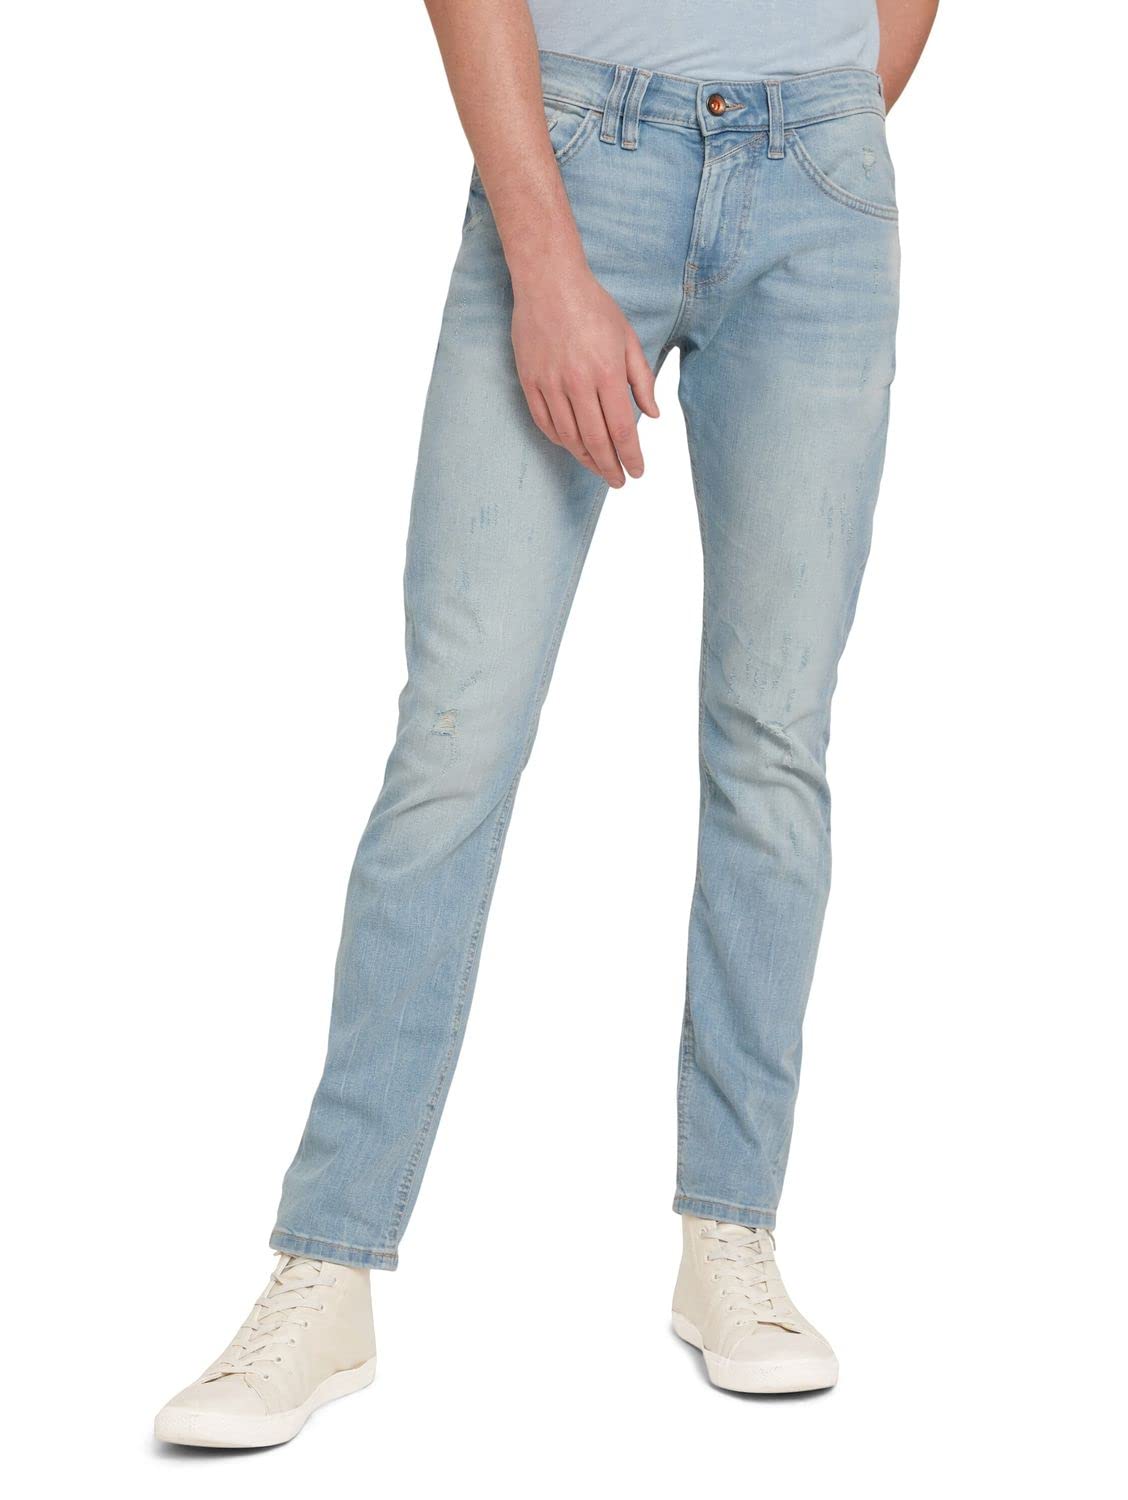 TOM TAILOR Denim Herren Piers Slim Jeans 1029730, 10117 - Used Bleached Blue Denim, 33W / 32L